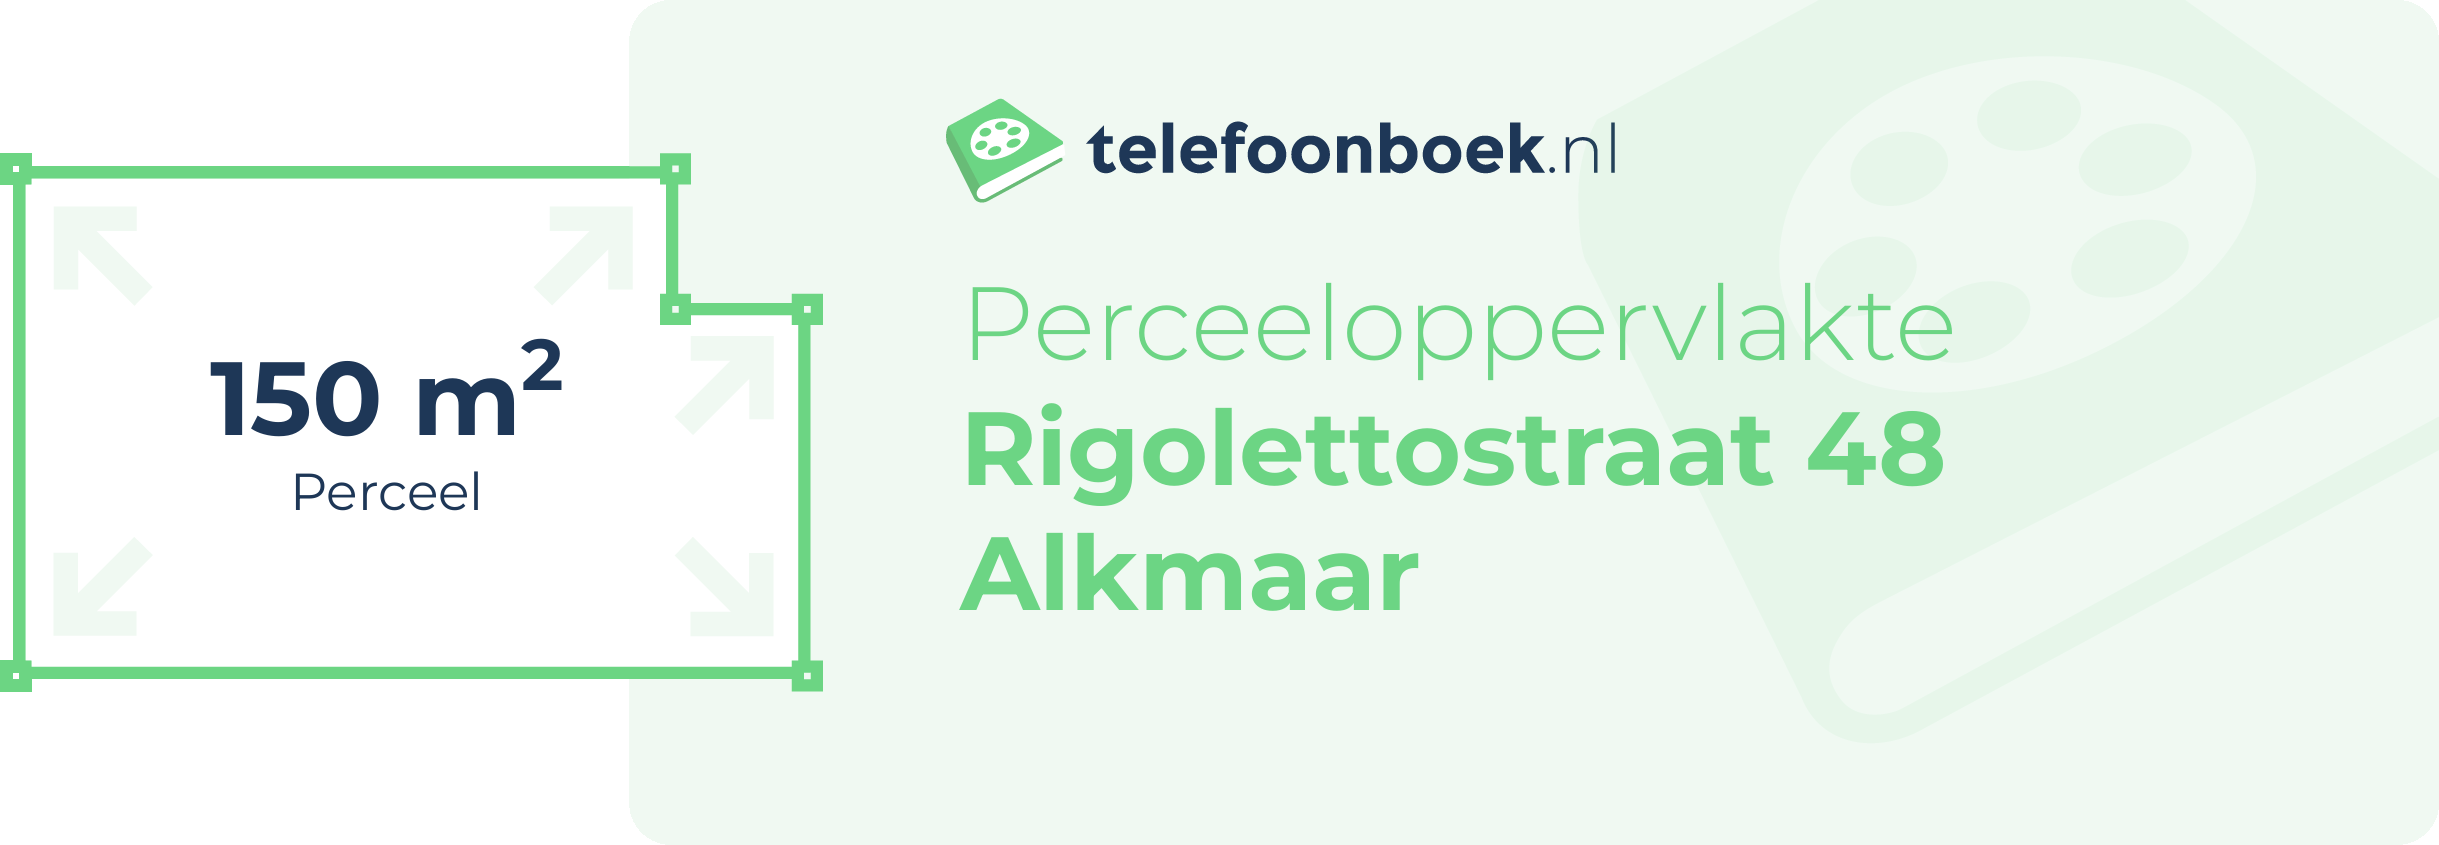 Perceeloppervlakte Rigolettostraat 48 Alkmaar